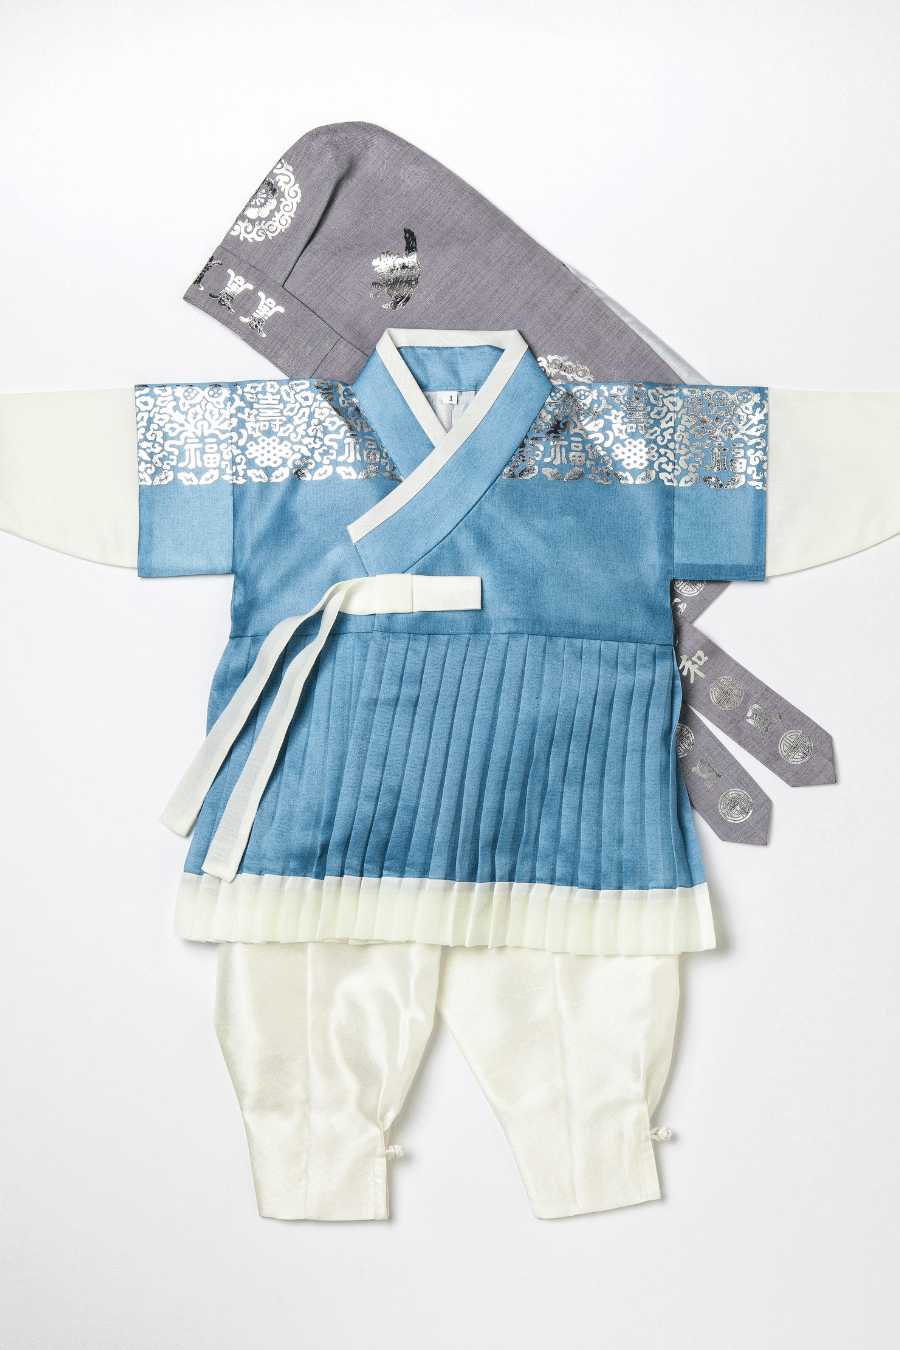 Baby boy dol hanbok #35